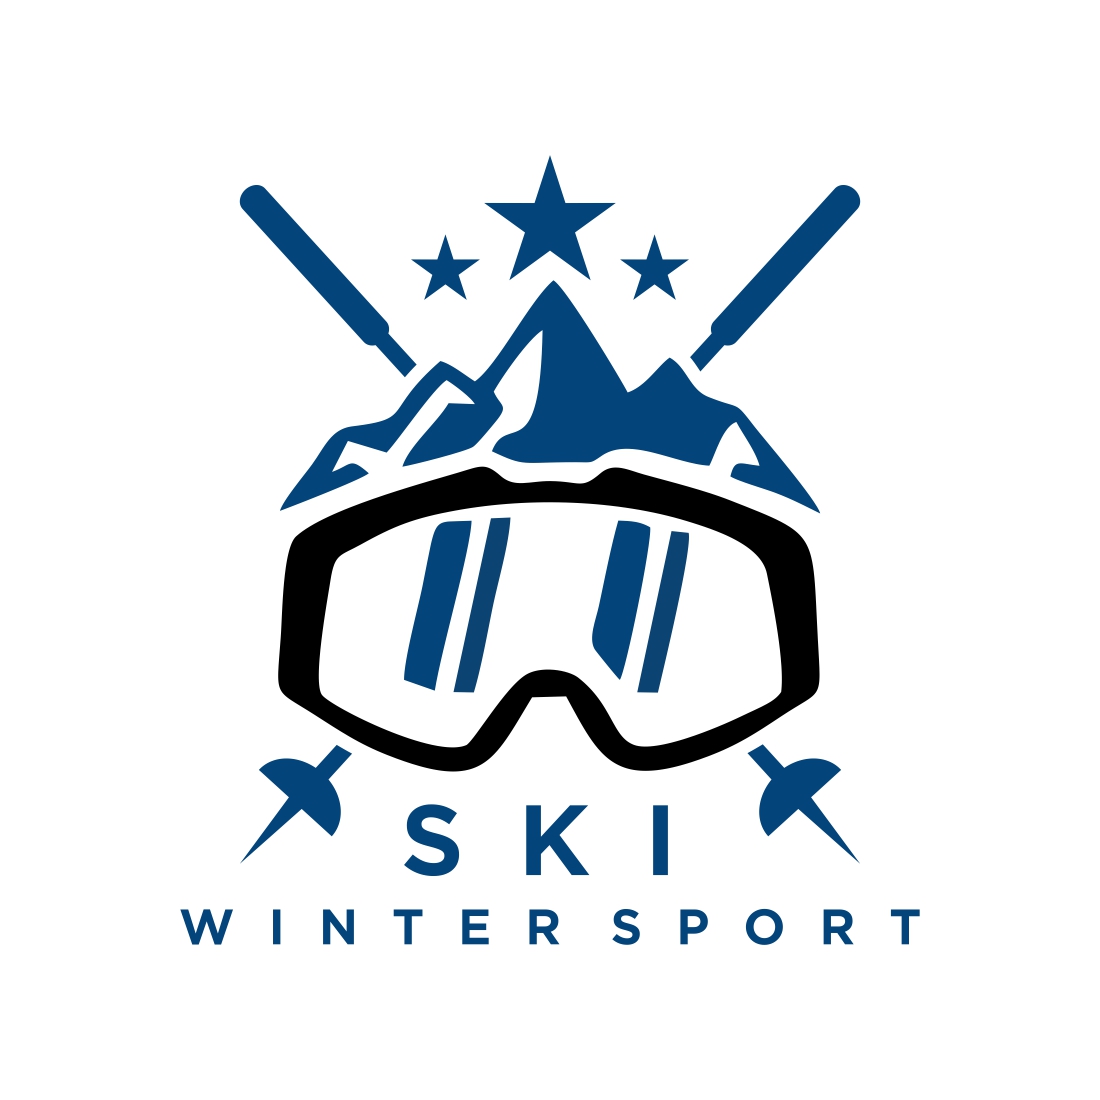 Skiing or winter sport logo emblem, design element Vector illustration Monochrome Graphic Art Concept for shirts, cover image.